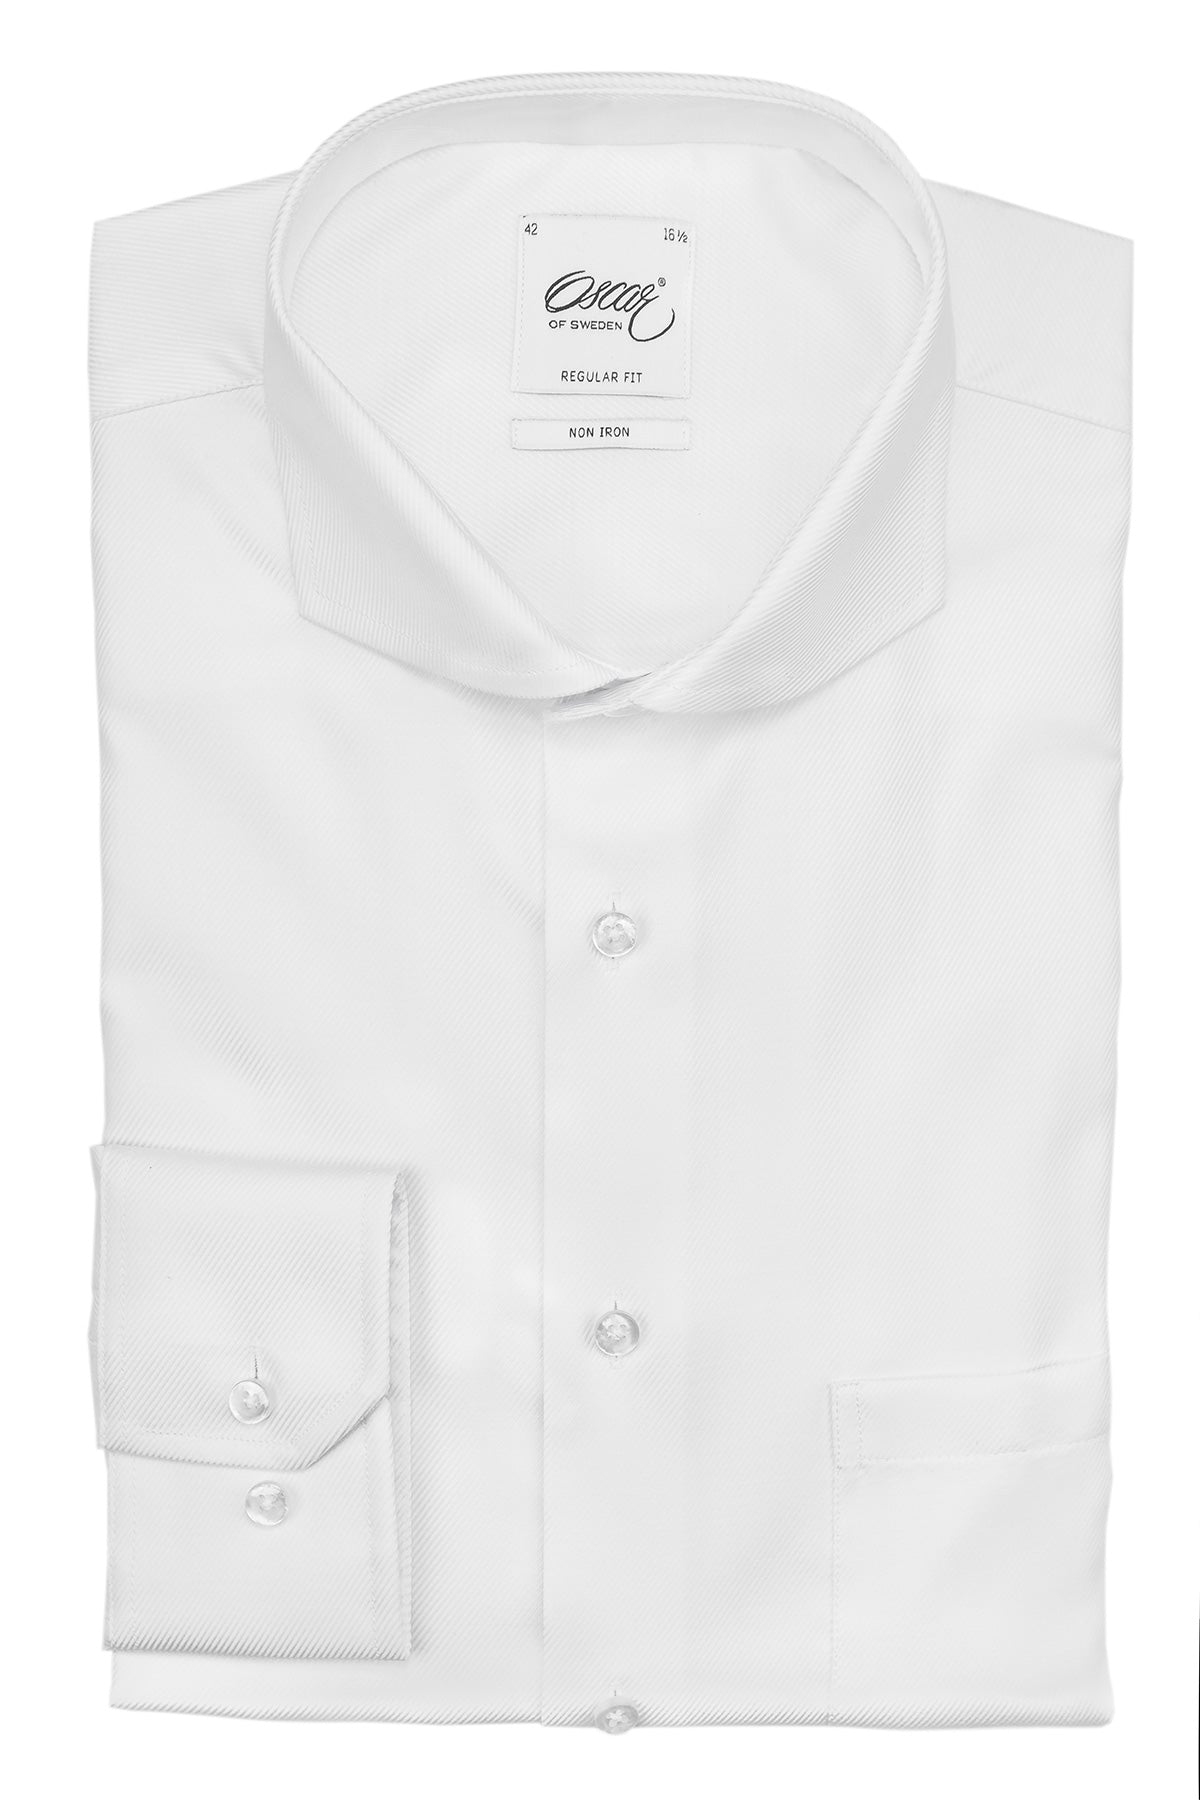 White regular fit twill shirt